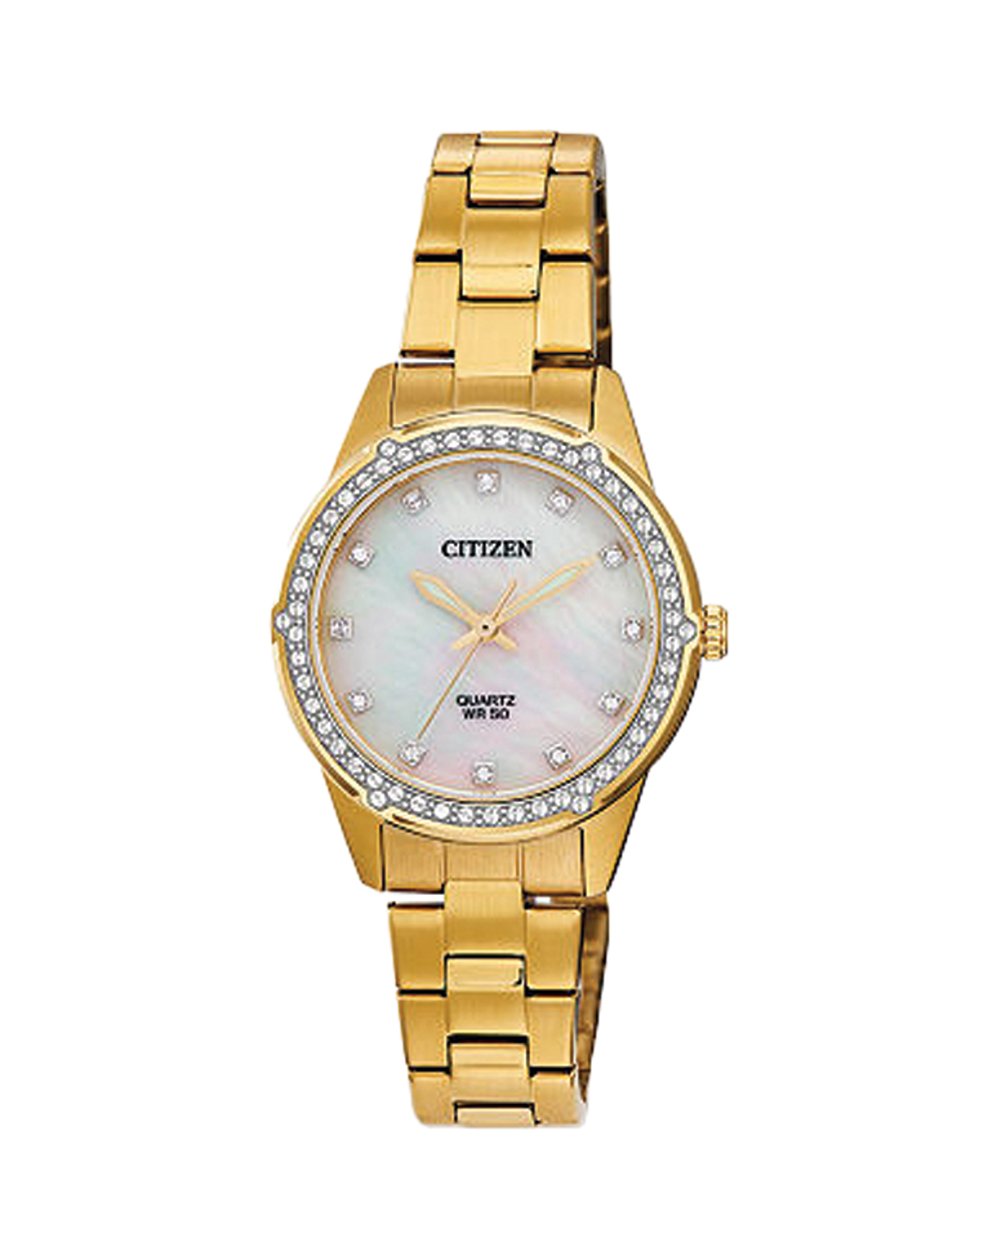 Citizen women's quartz stone set dress watch in gold tone